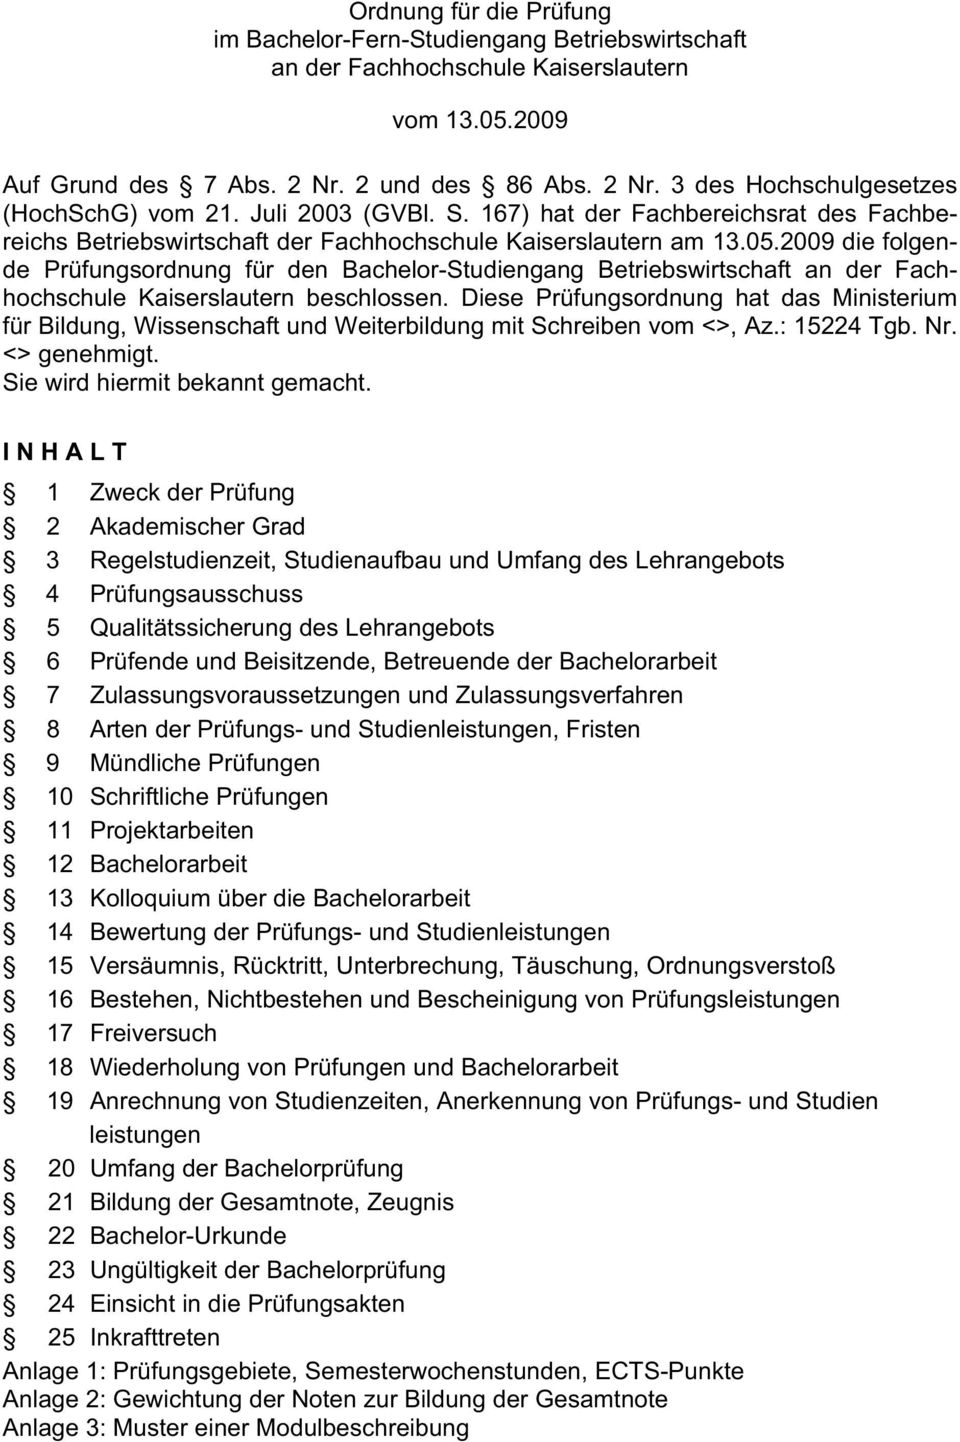 2009 die folgende Prüfungsordnung für den Bachelor-Studiengang Betriebswirtschaft an der Fachhochschule Kaiserslautern beschlossen.